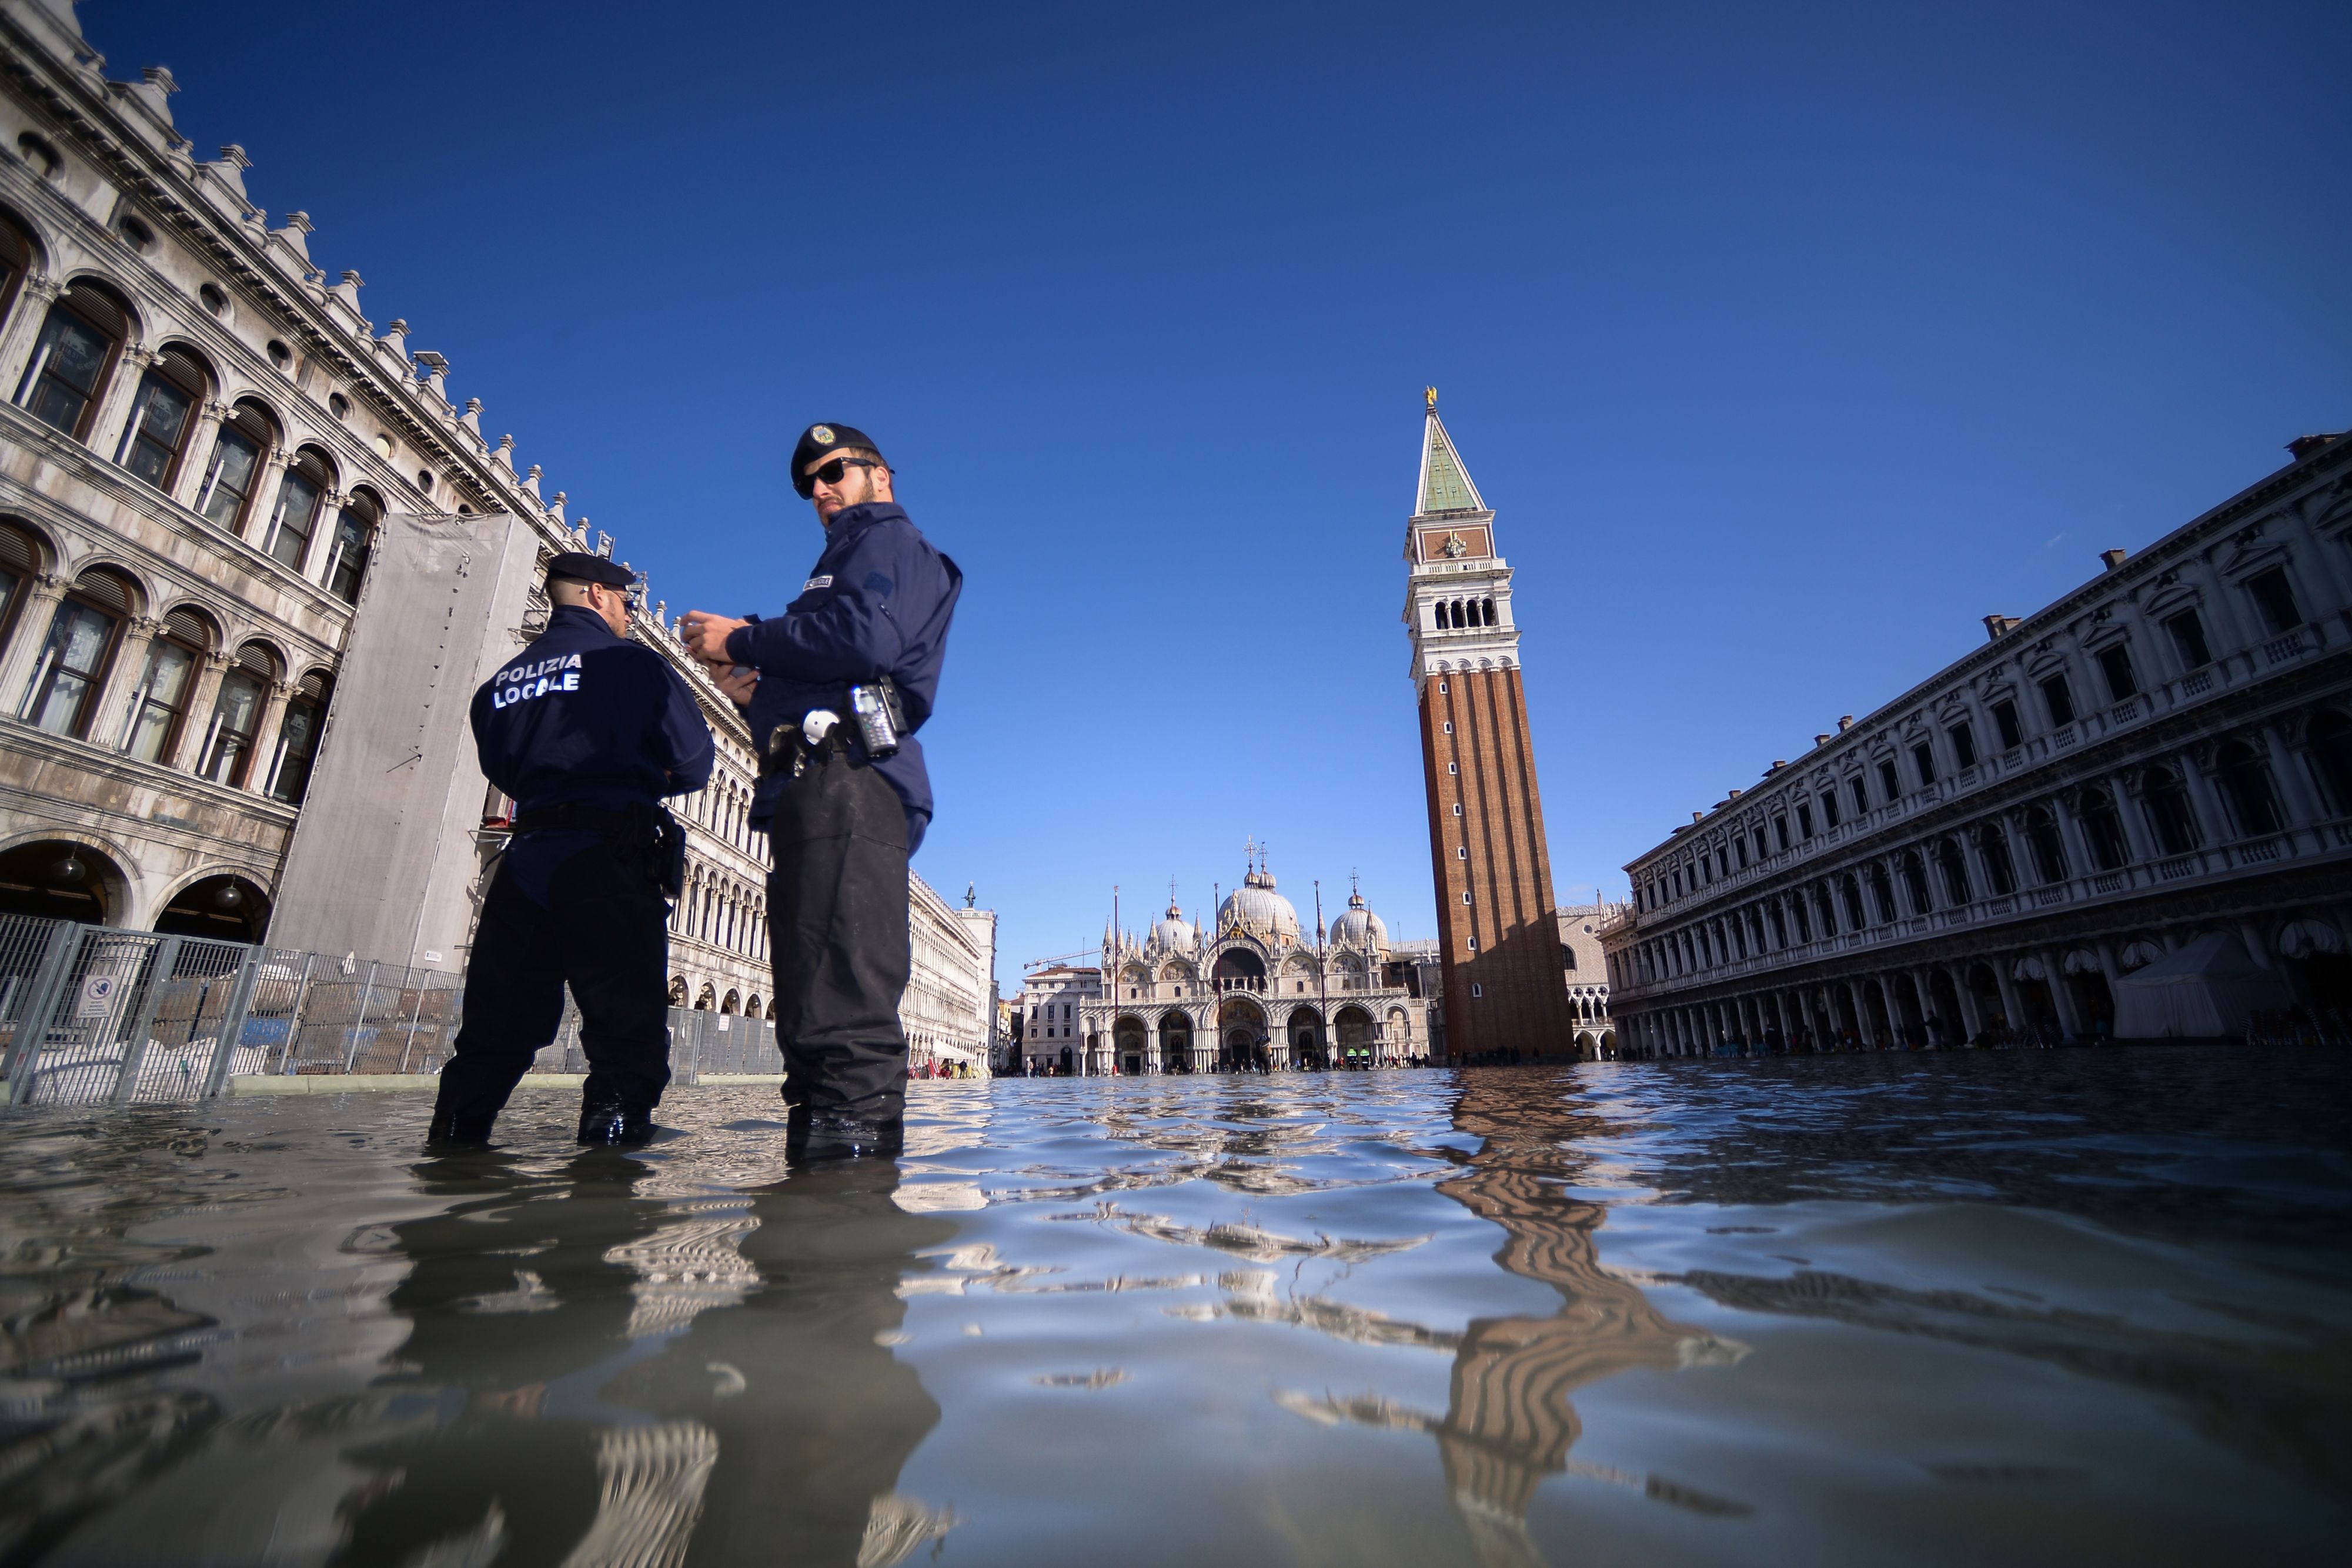 Burgemeester Venetië sluit San Marcoplein